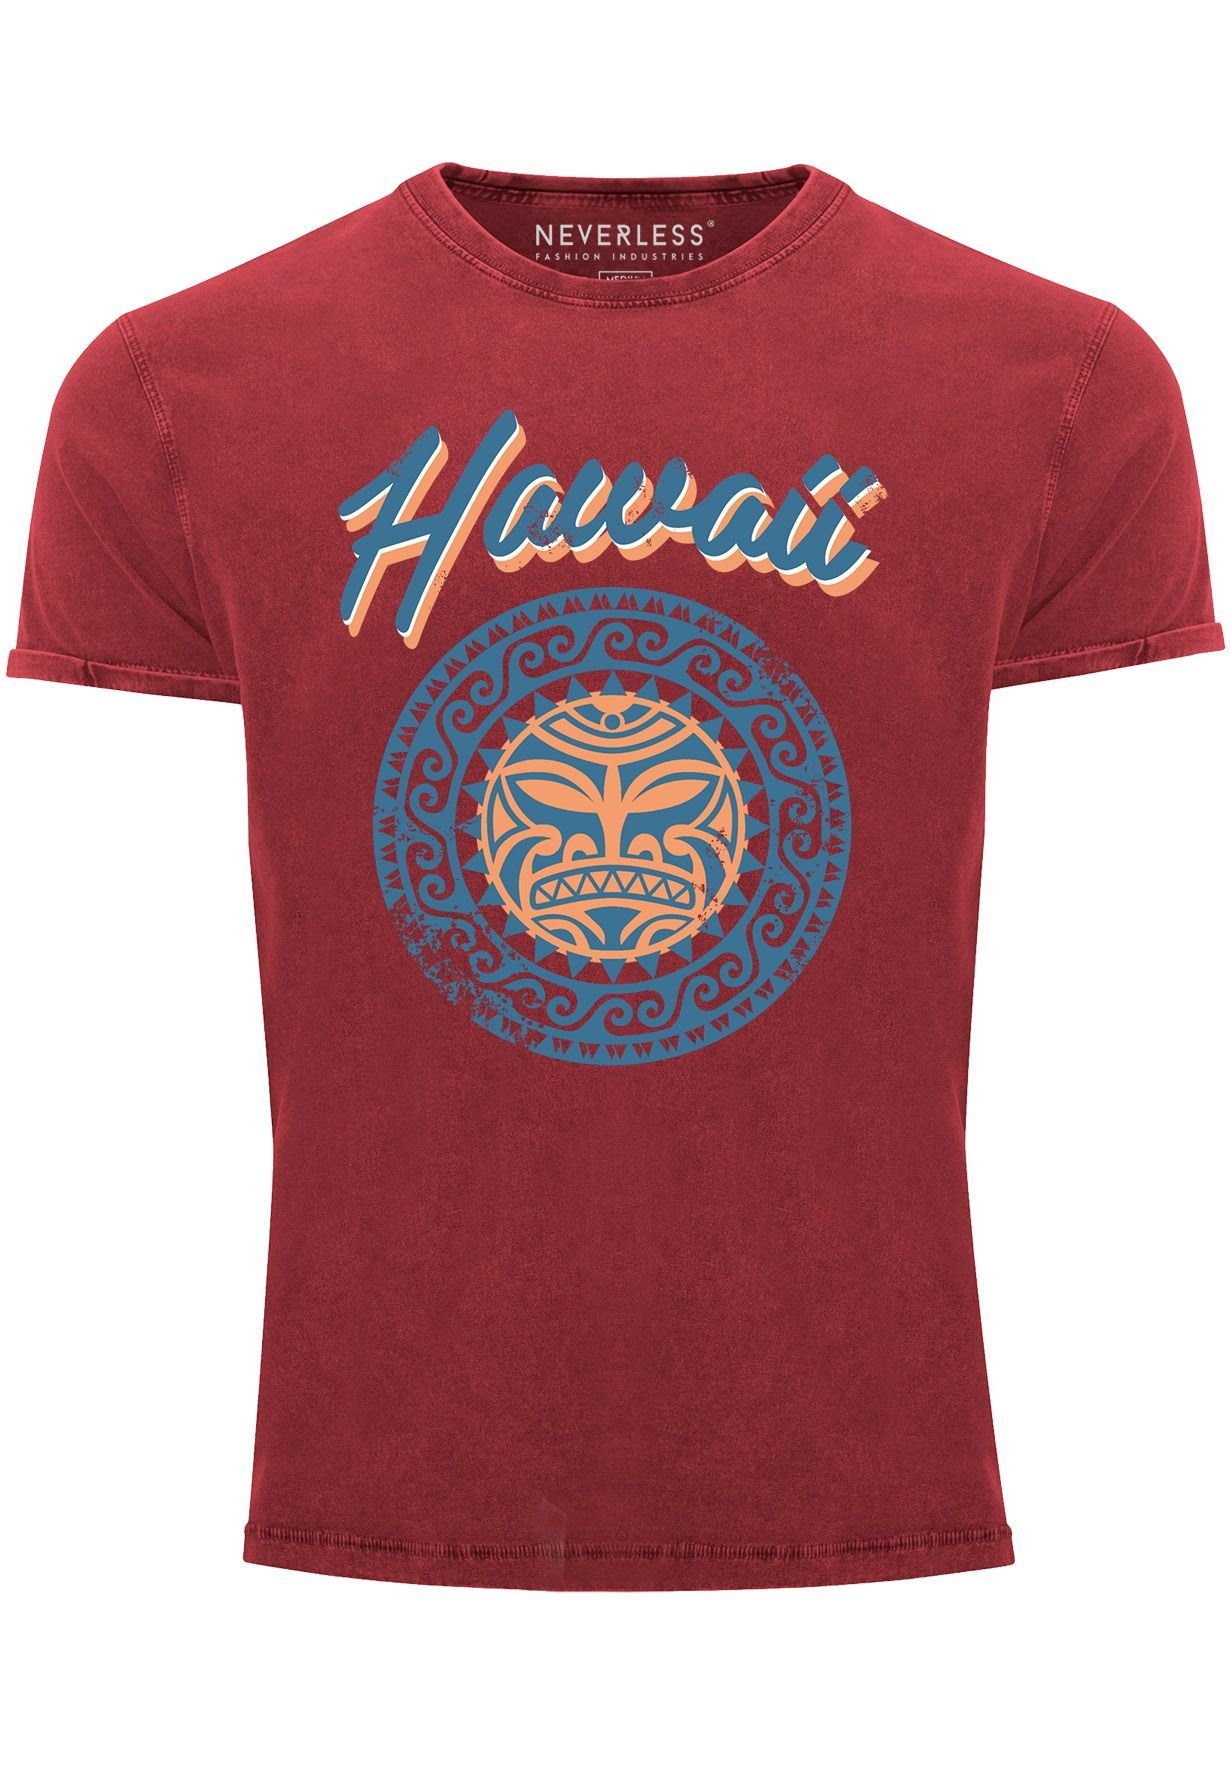 Neverless Print-Shirt Herren T-Shirt Hawaii Tattoo Tribal Maui Ethno Style Printshirt Vintag mit Print rot